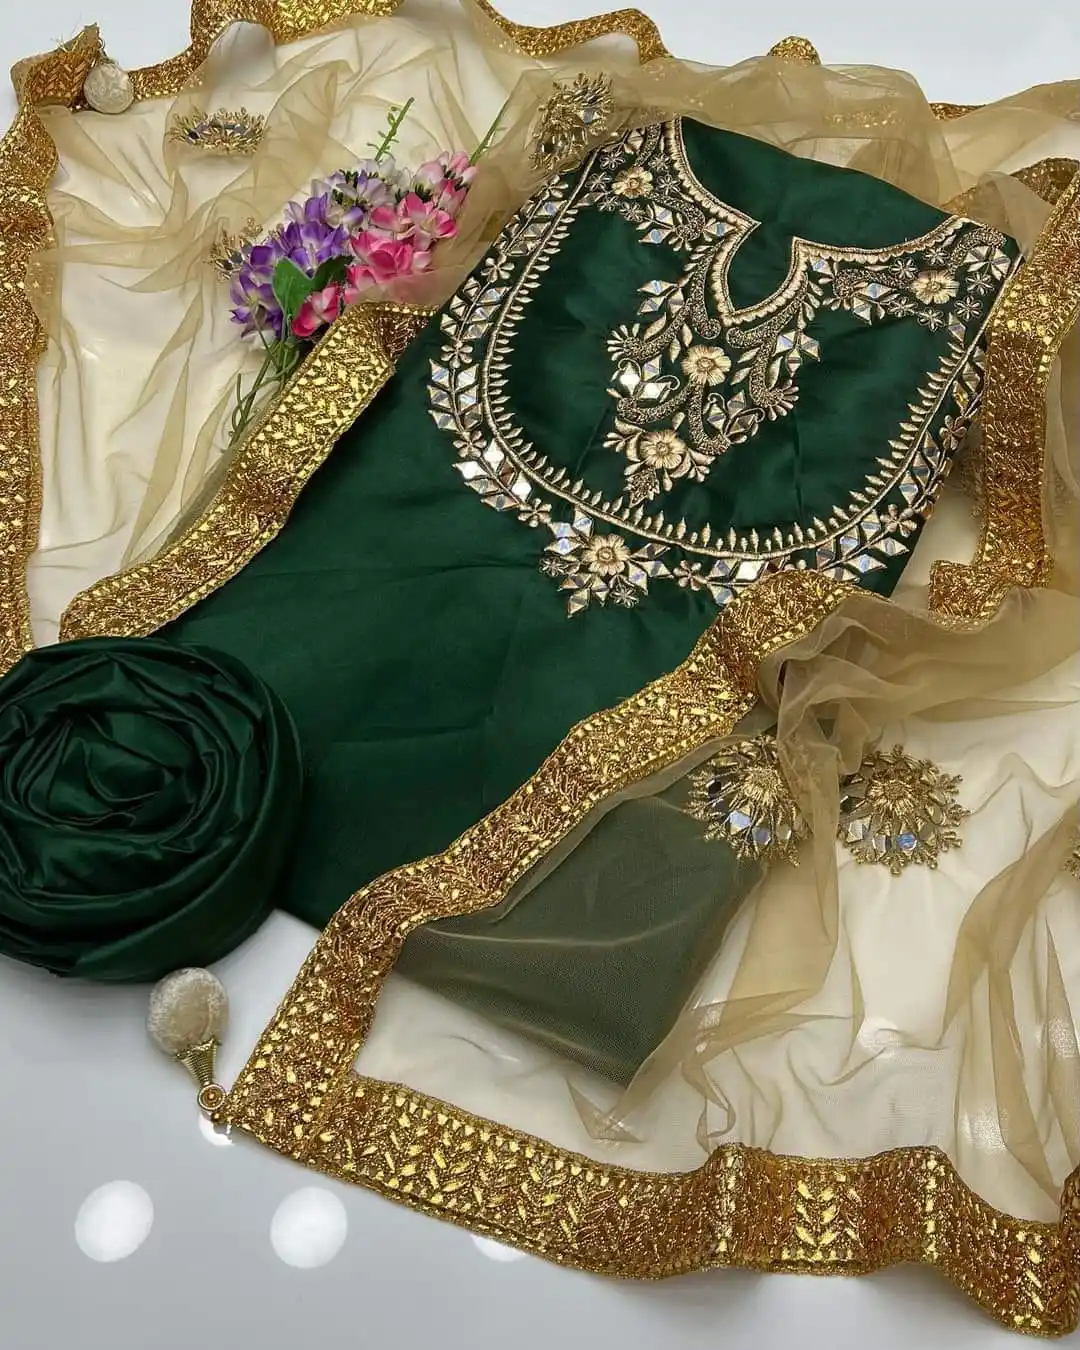 Eastern eid shalwar kameez vestido bordado, vestido étnico guerra ramdan shalwar kameez paquistani